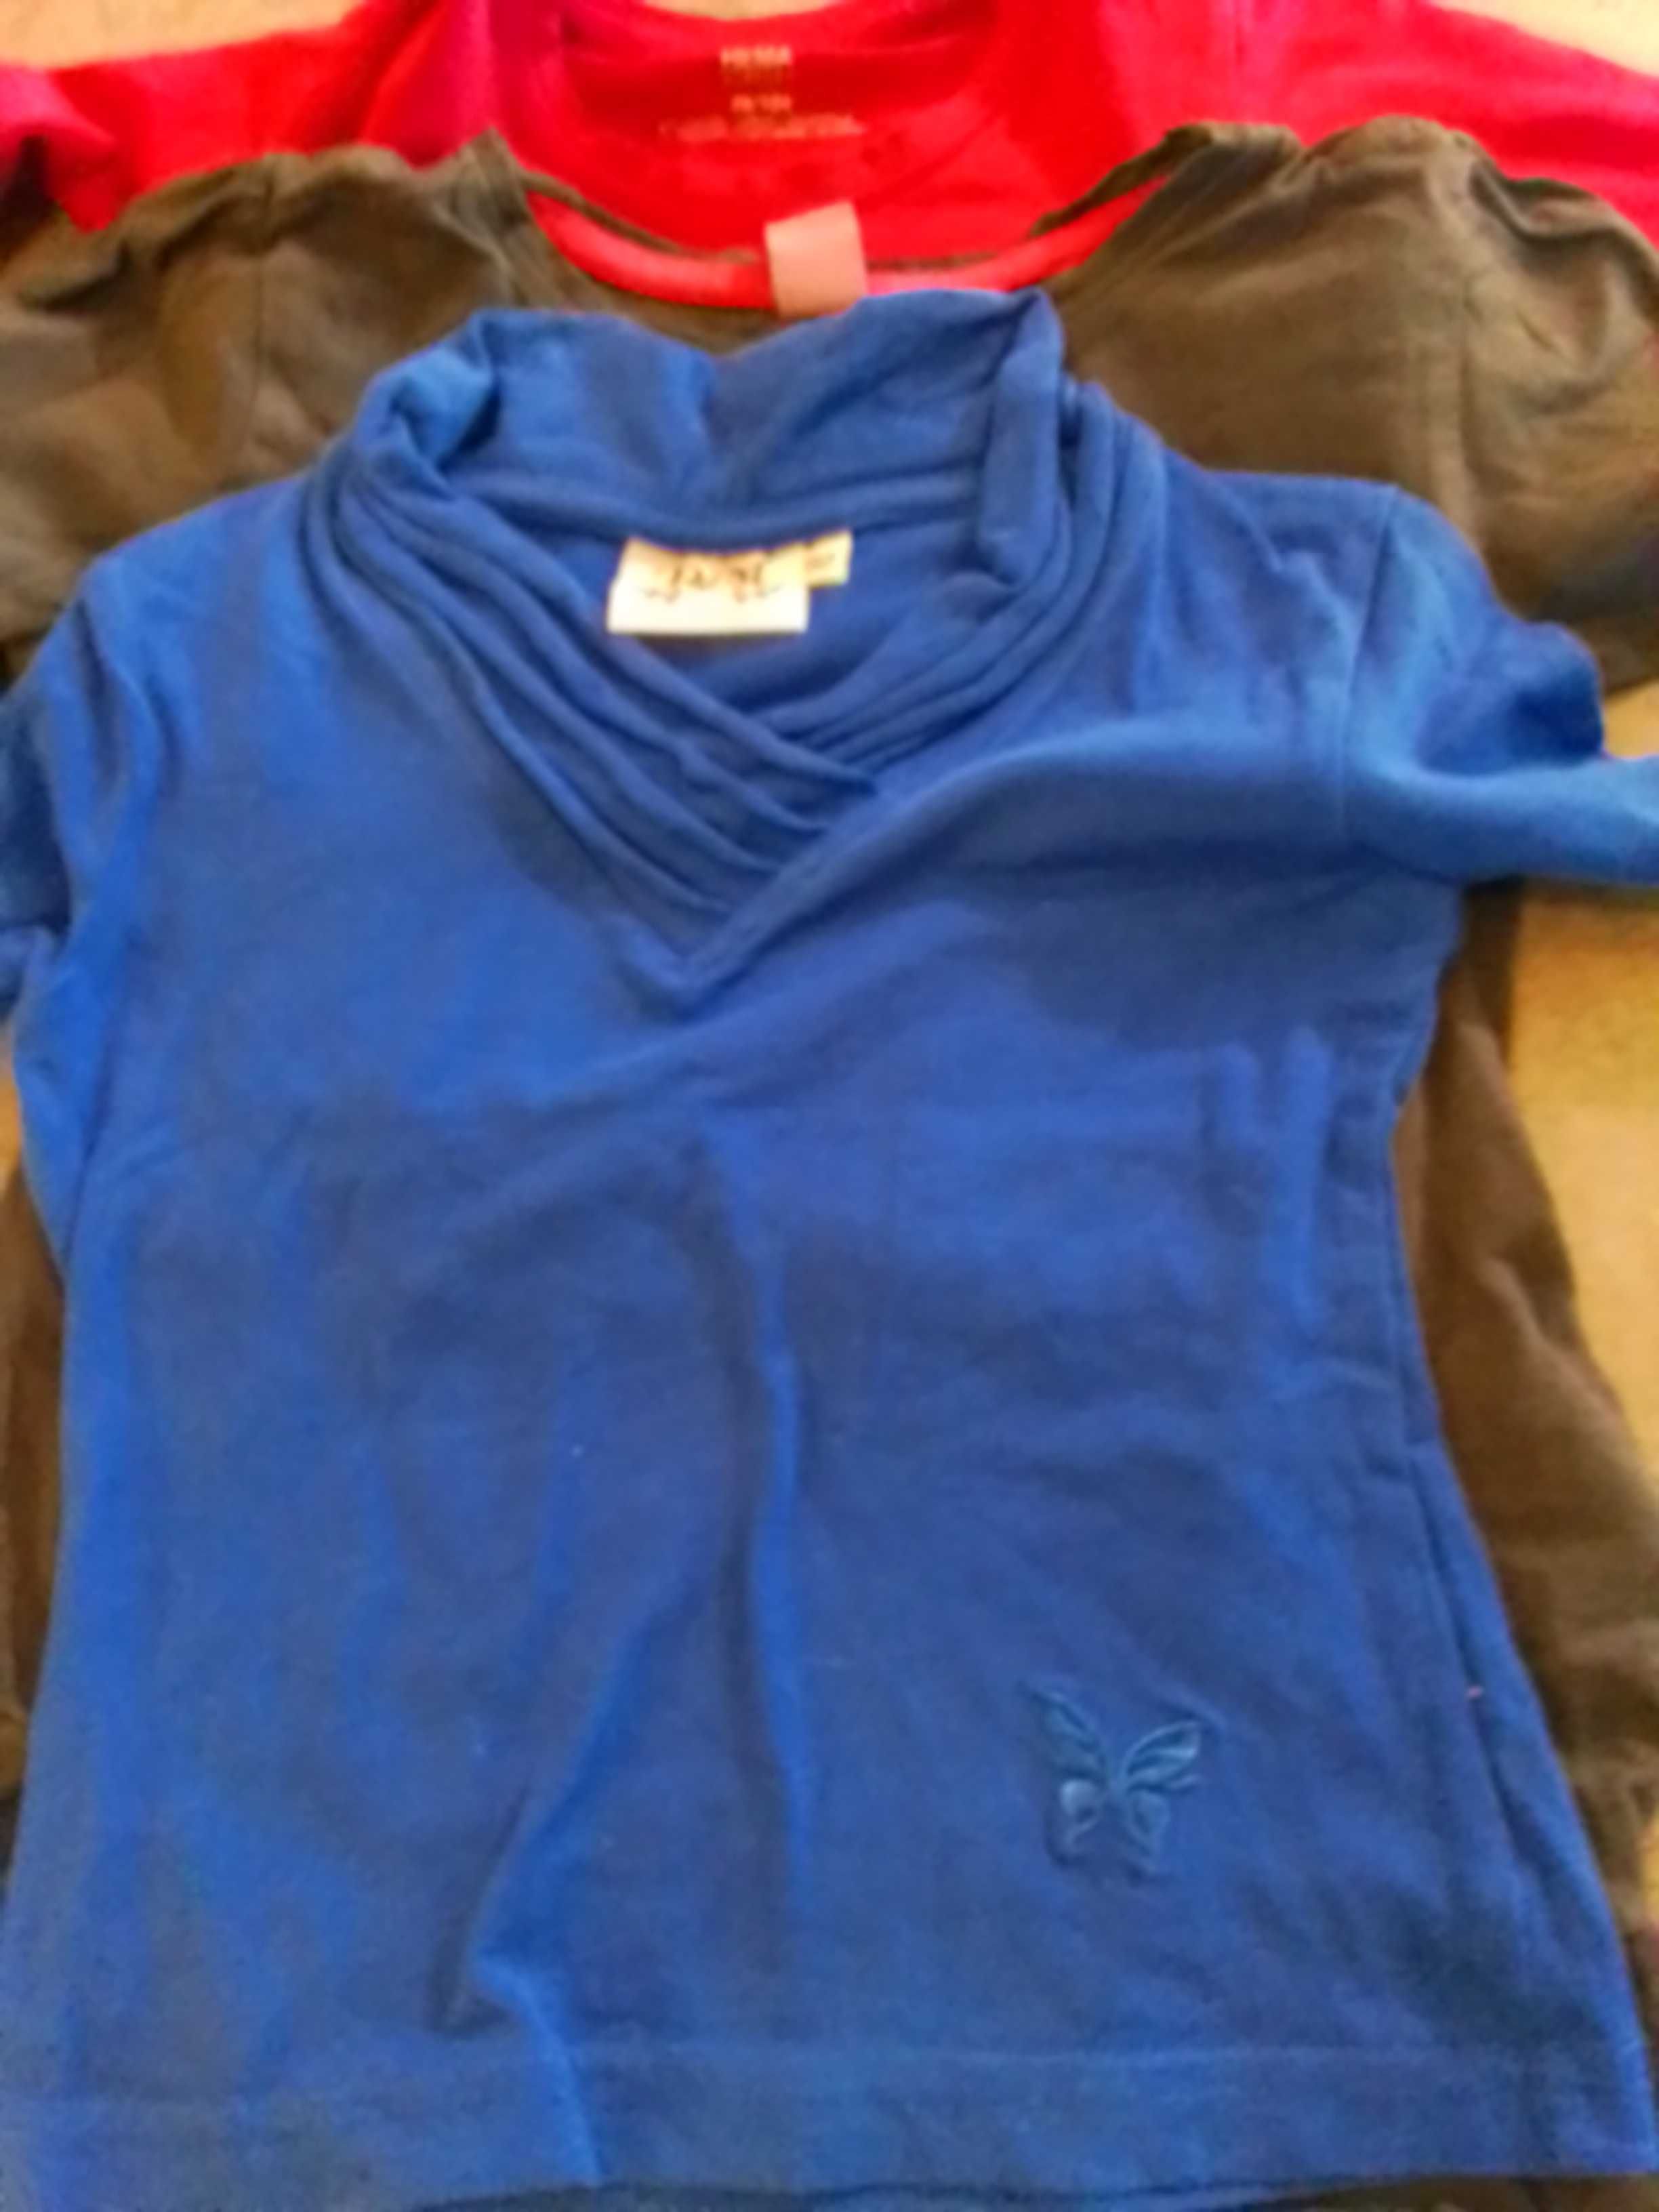 Bluze fetite bebelusi diferite modele Nr. 86-92-98-104